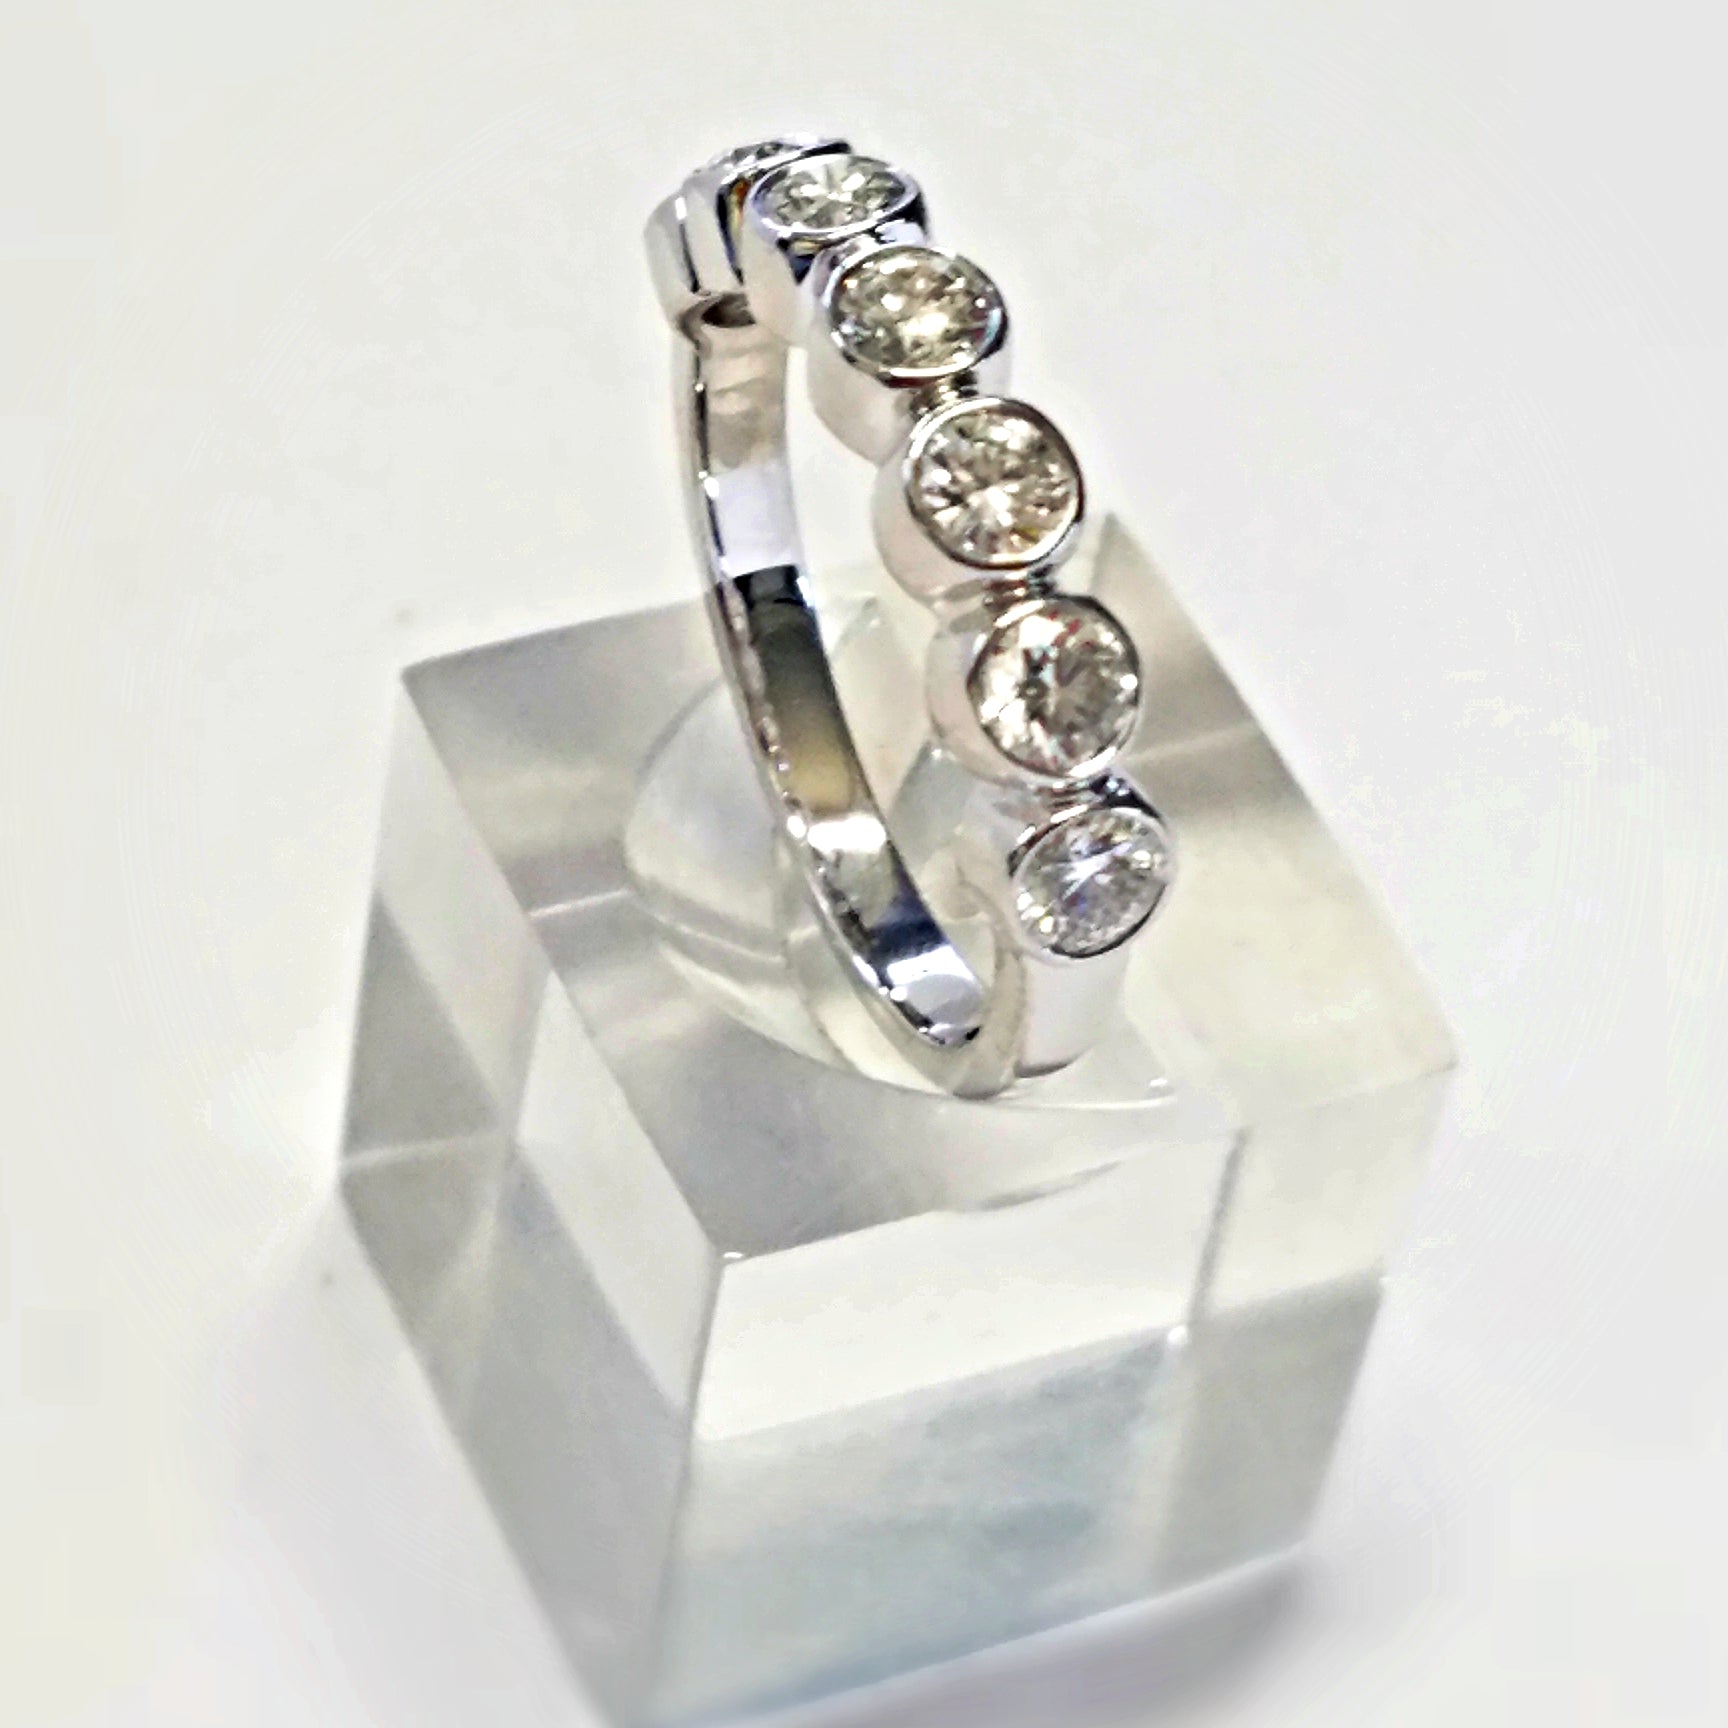 Shop Engagement Rings - Unique Diamond Rings | Ritani